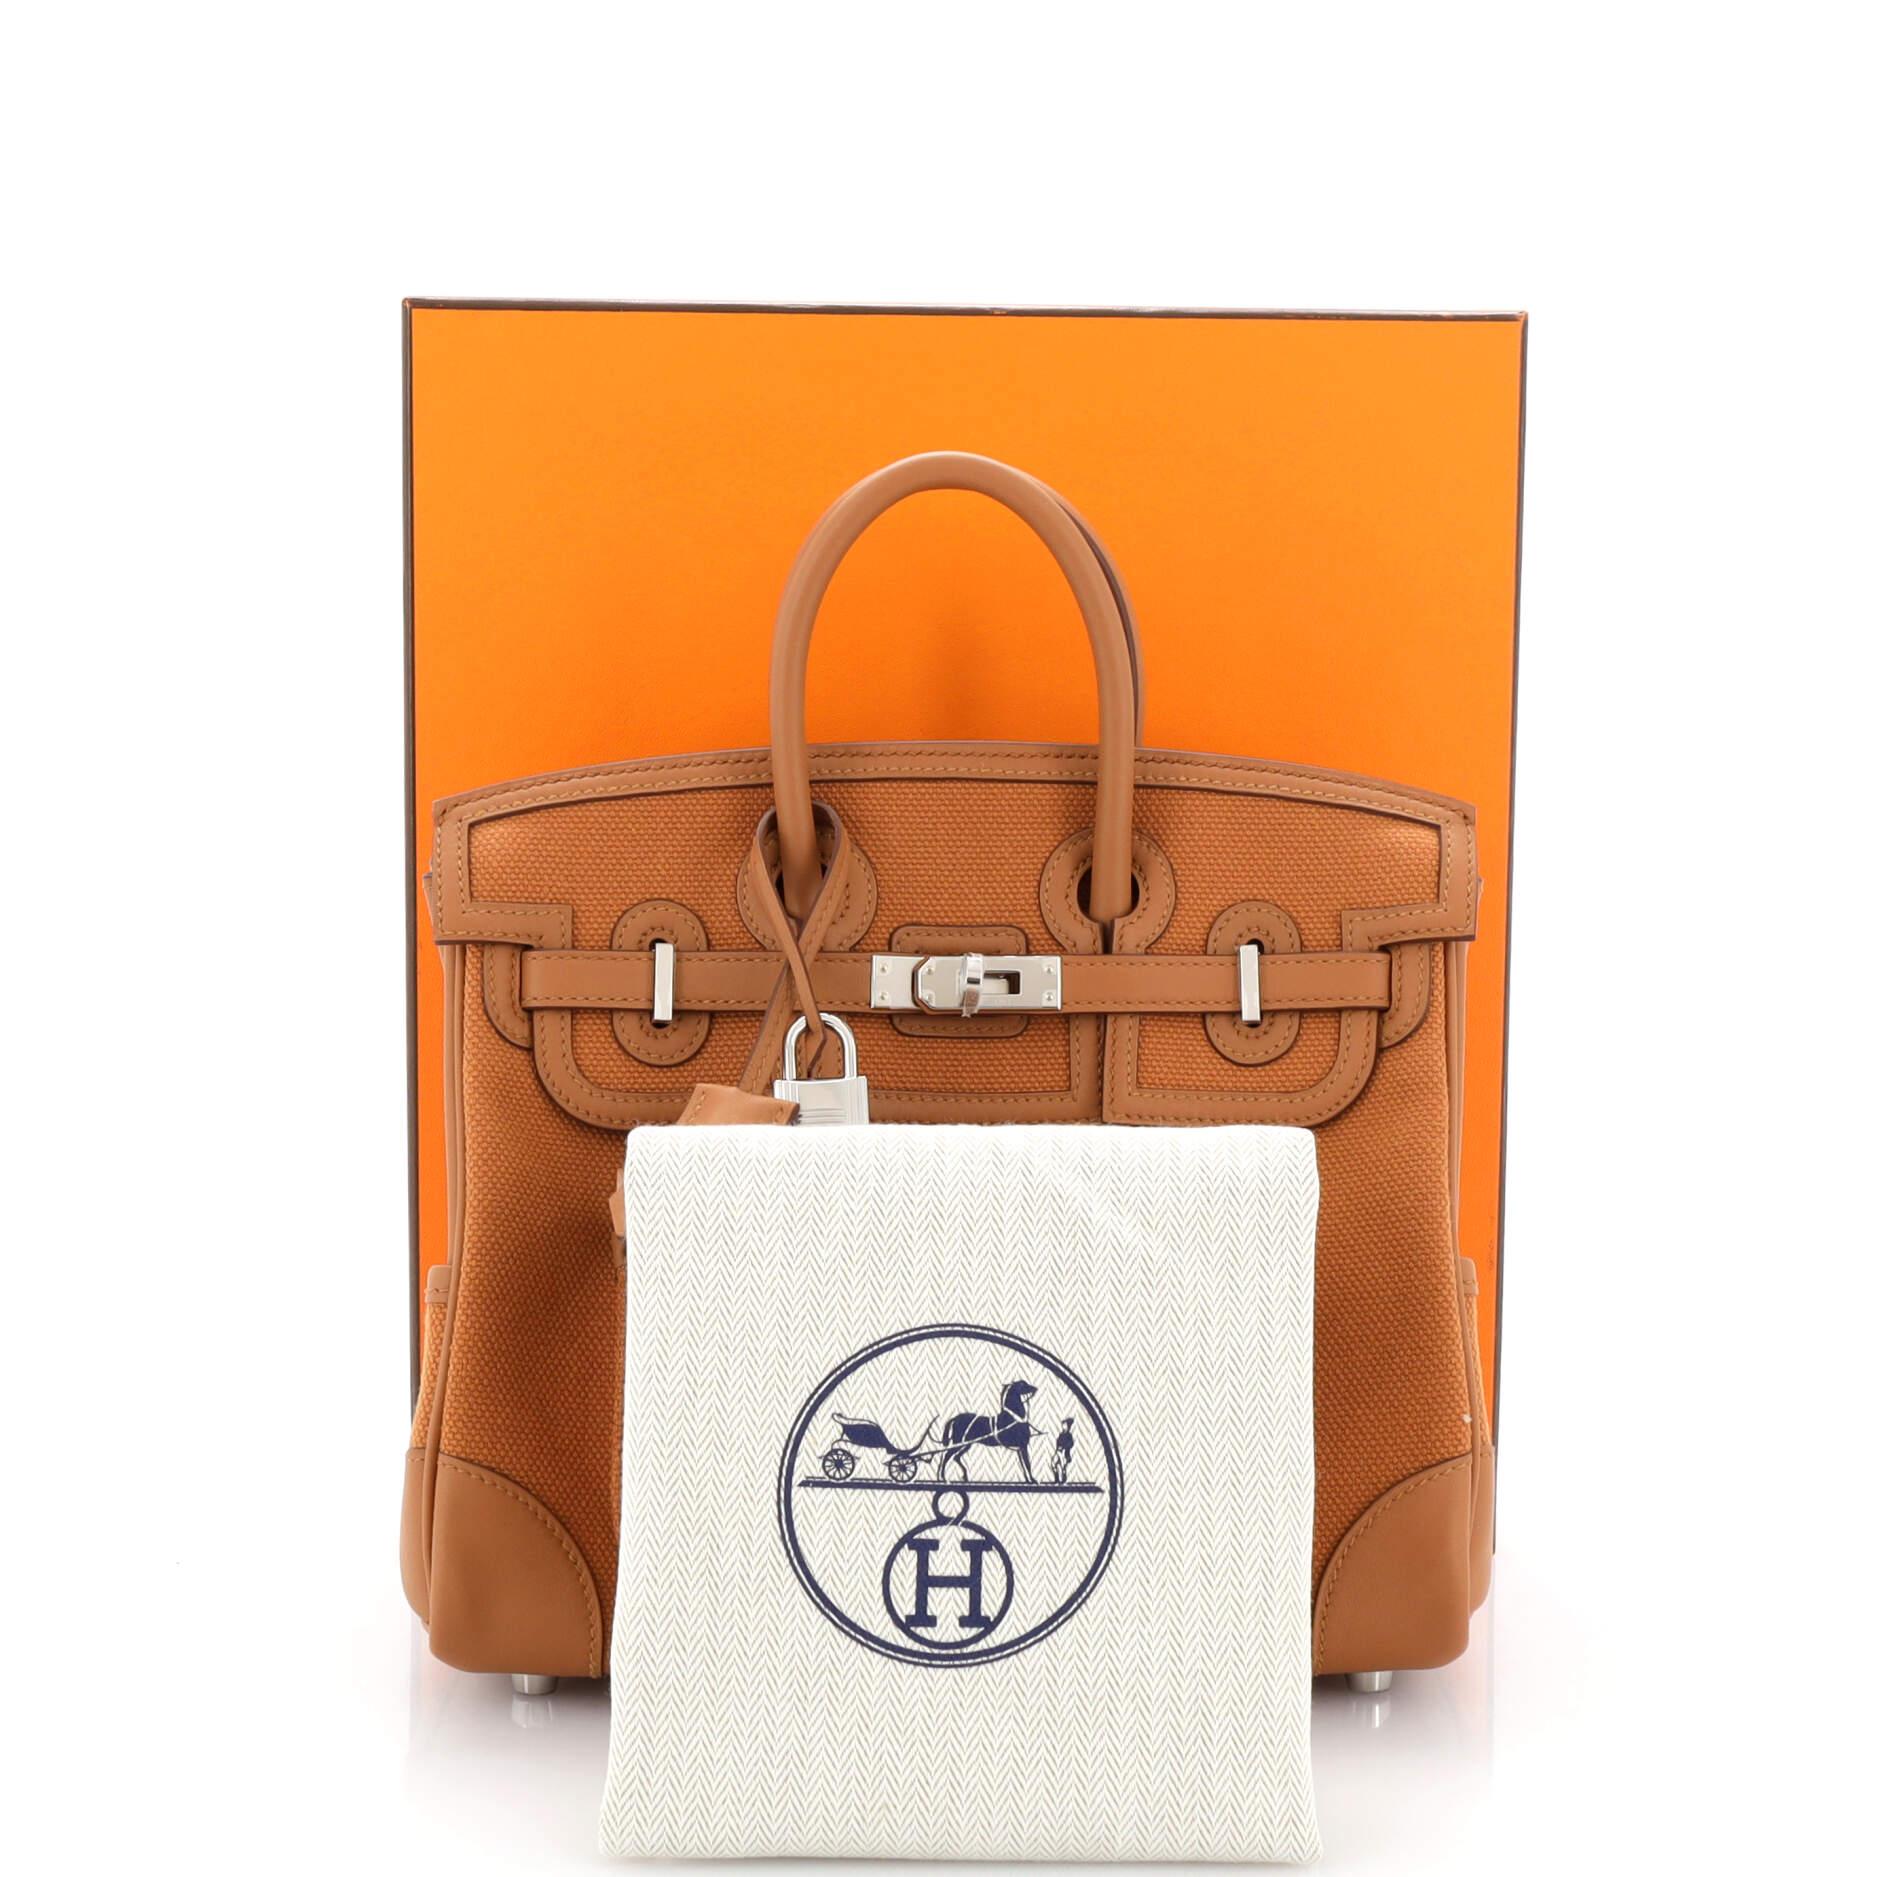 Hermes Birkin Bag Cargo - 9 For Sale on 1stDibs